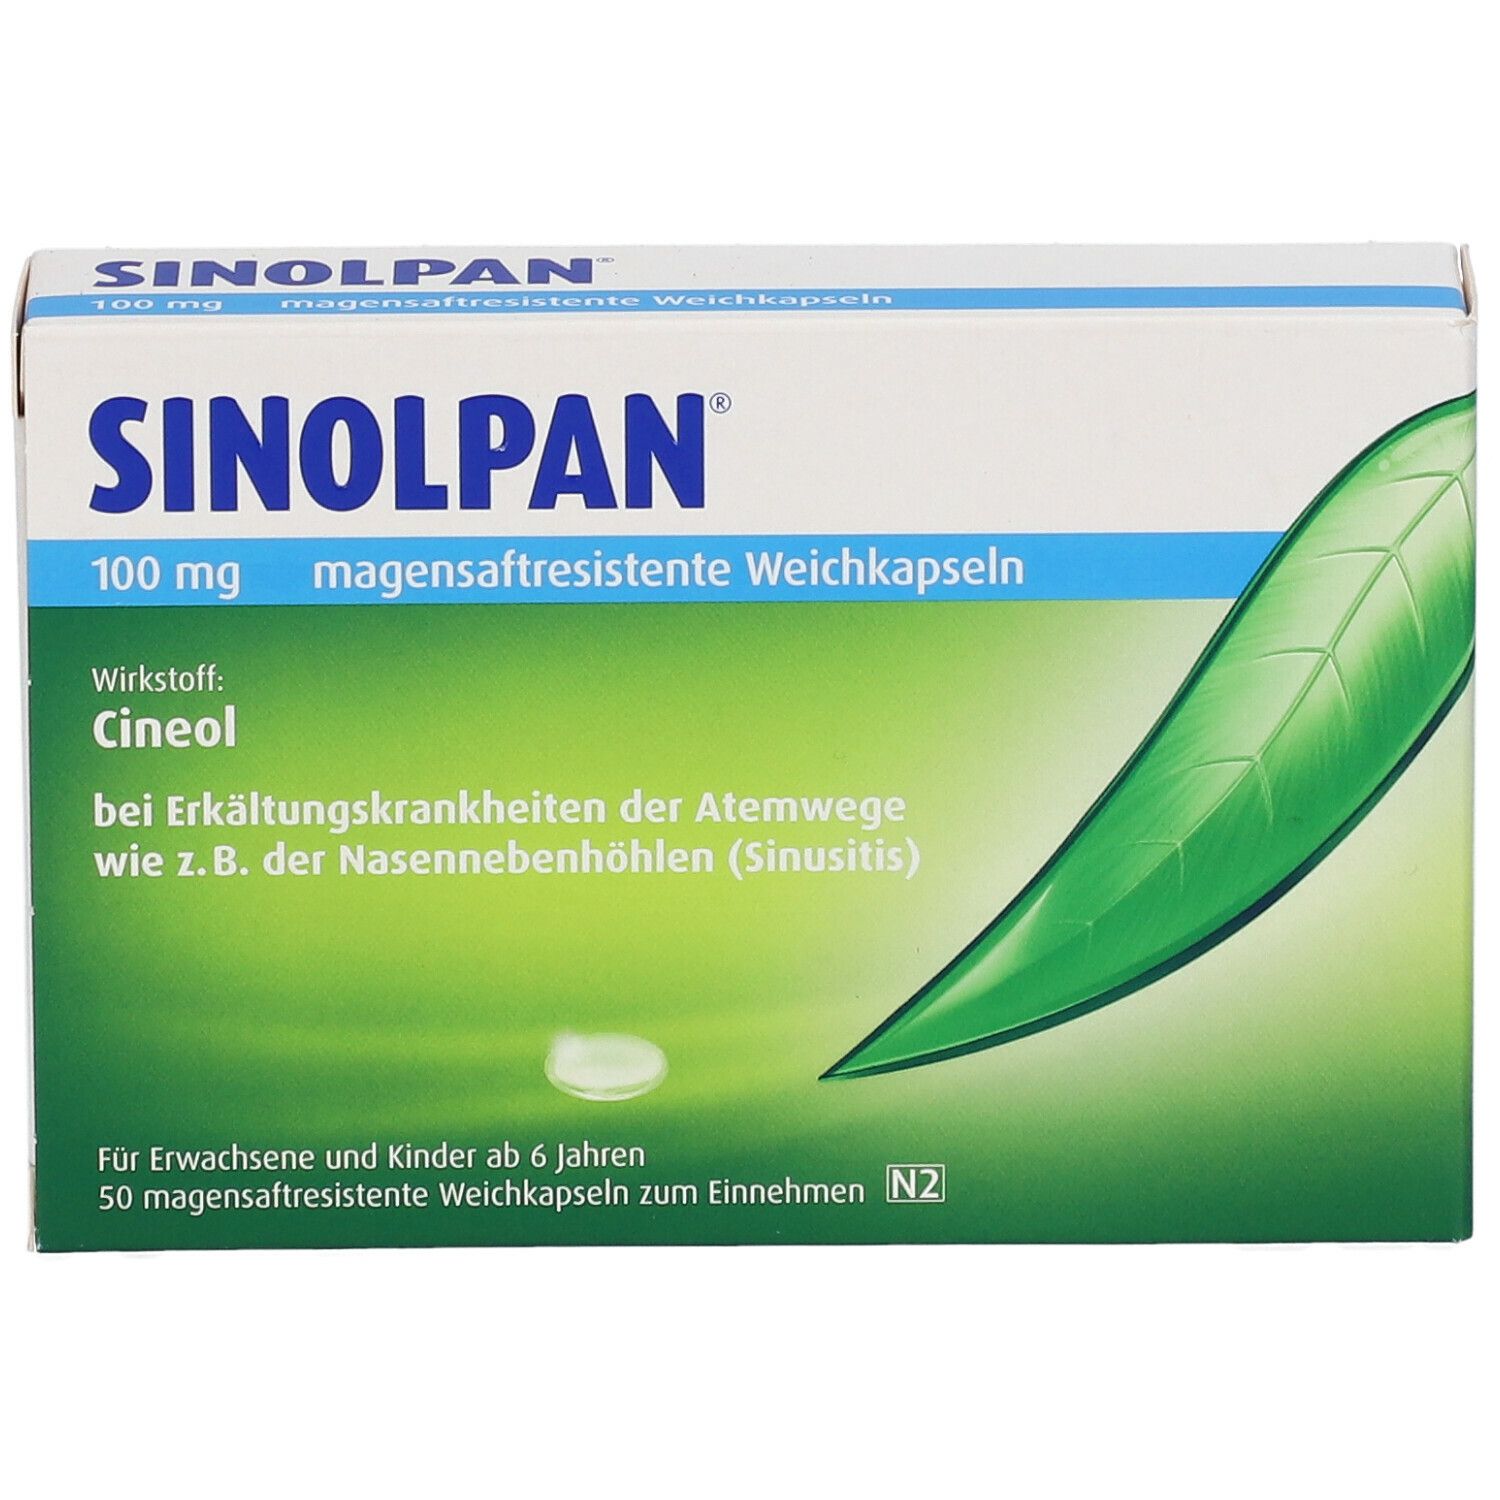 Sinolpan® 100 mg magensaftresistente Weichkapseln